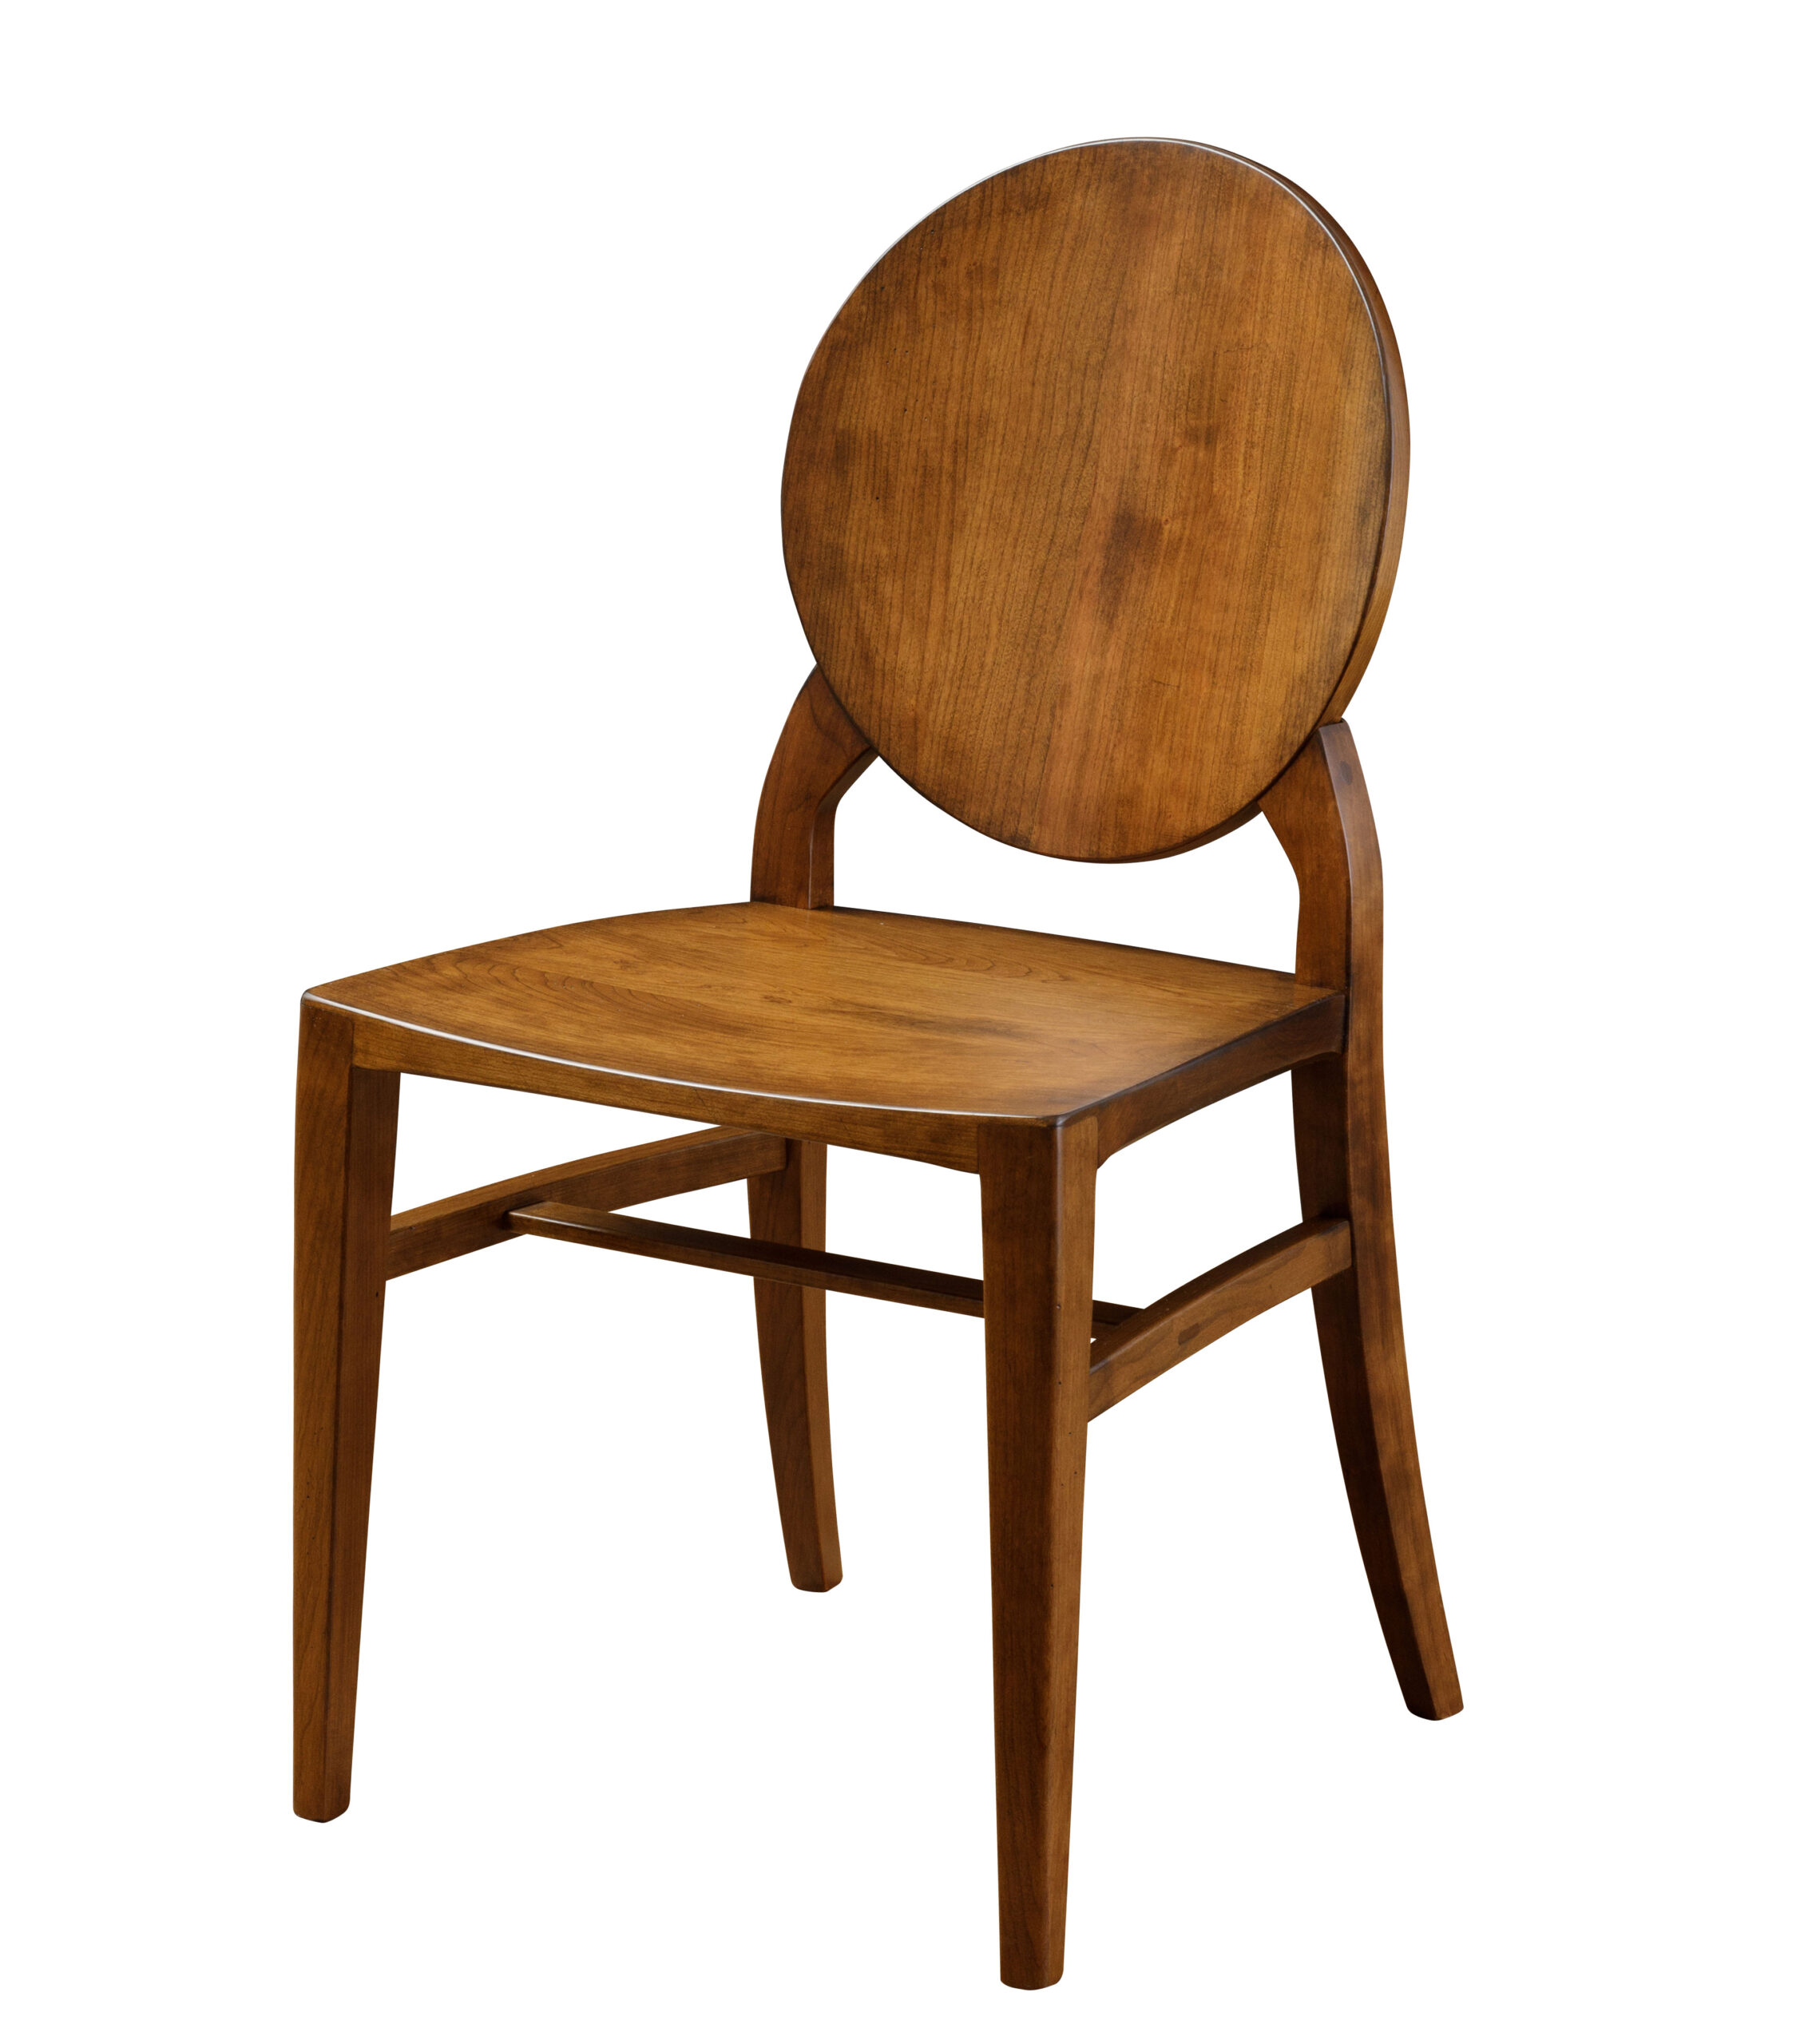 Designer Menlo Chair Image